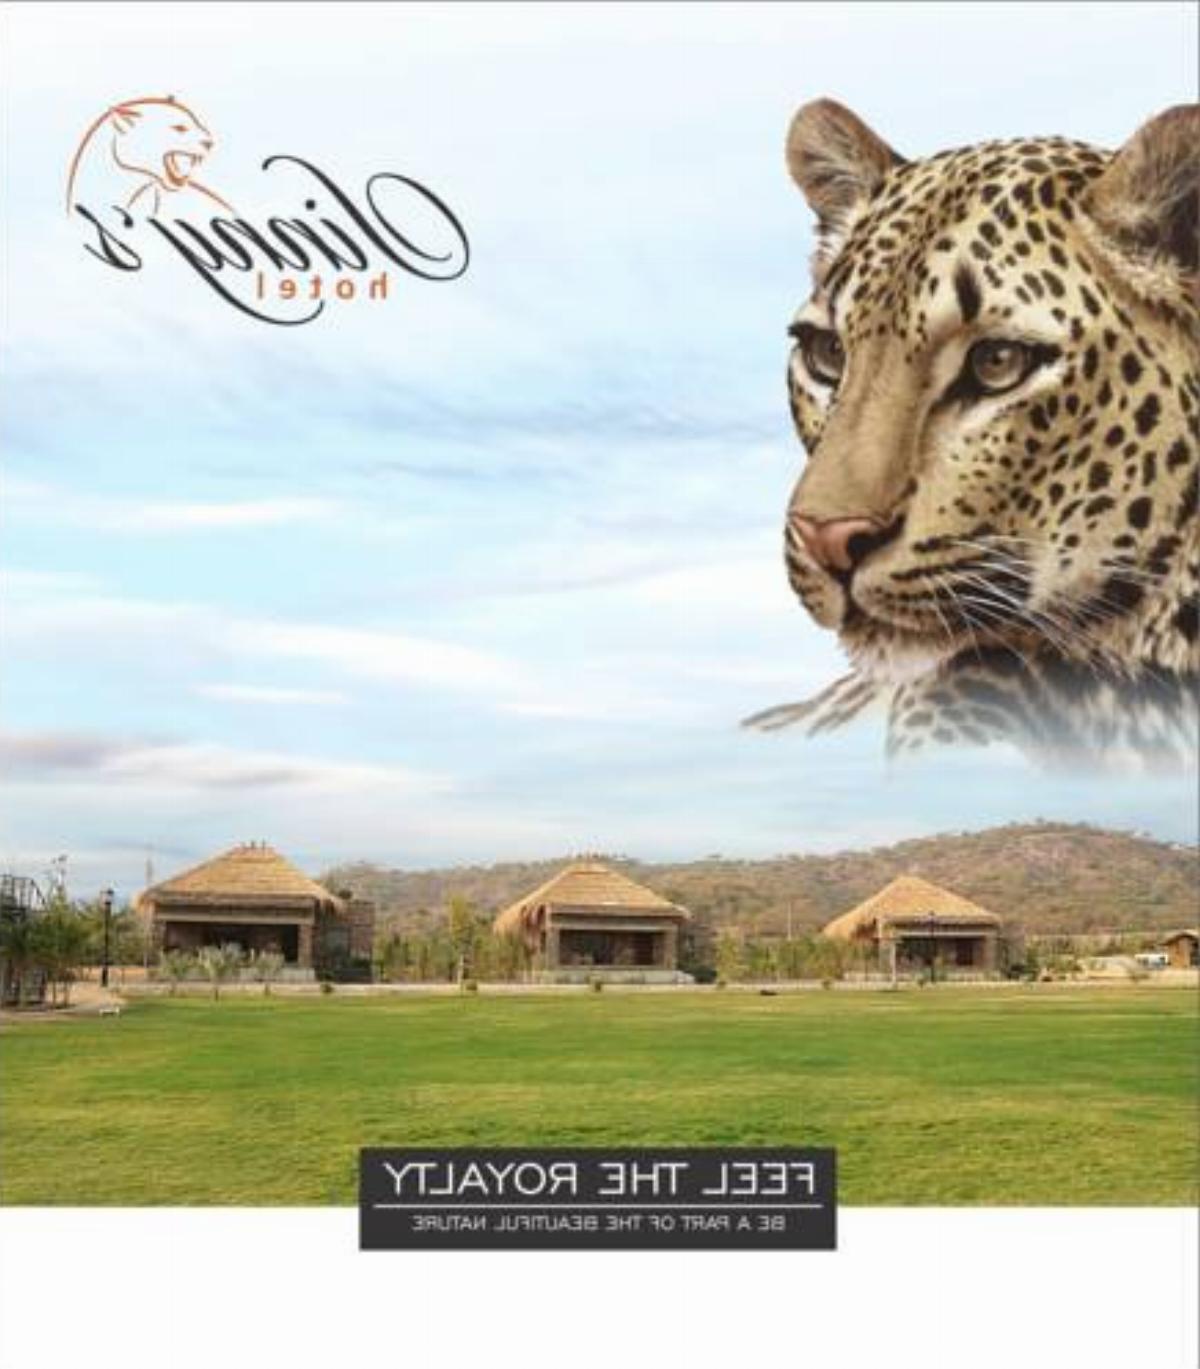 Sinny's Leopard Camp & Resort